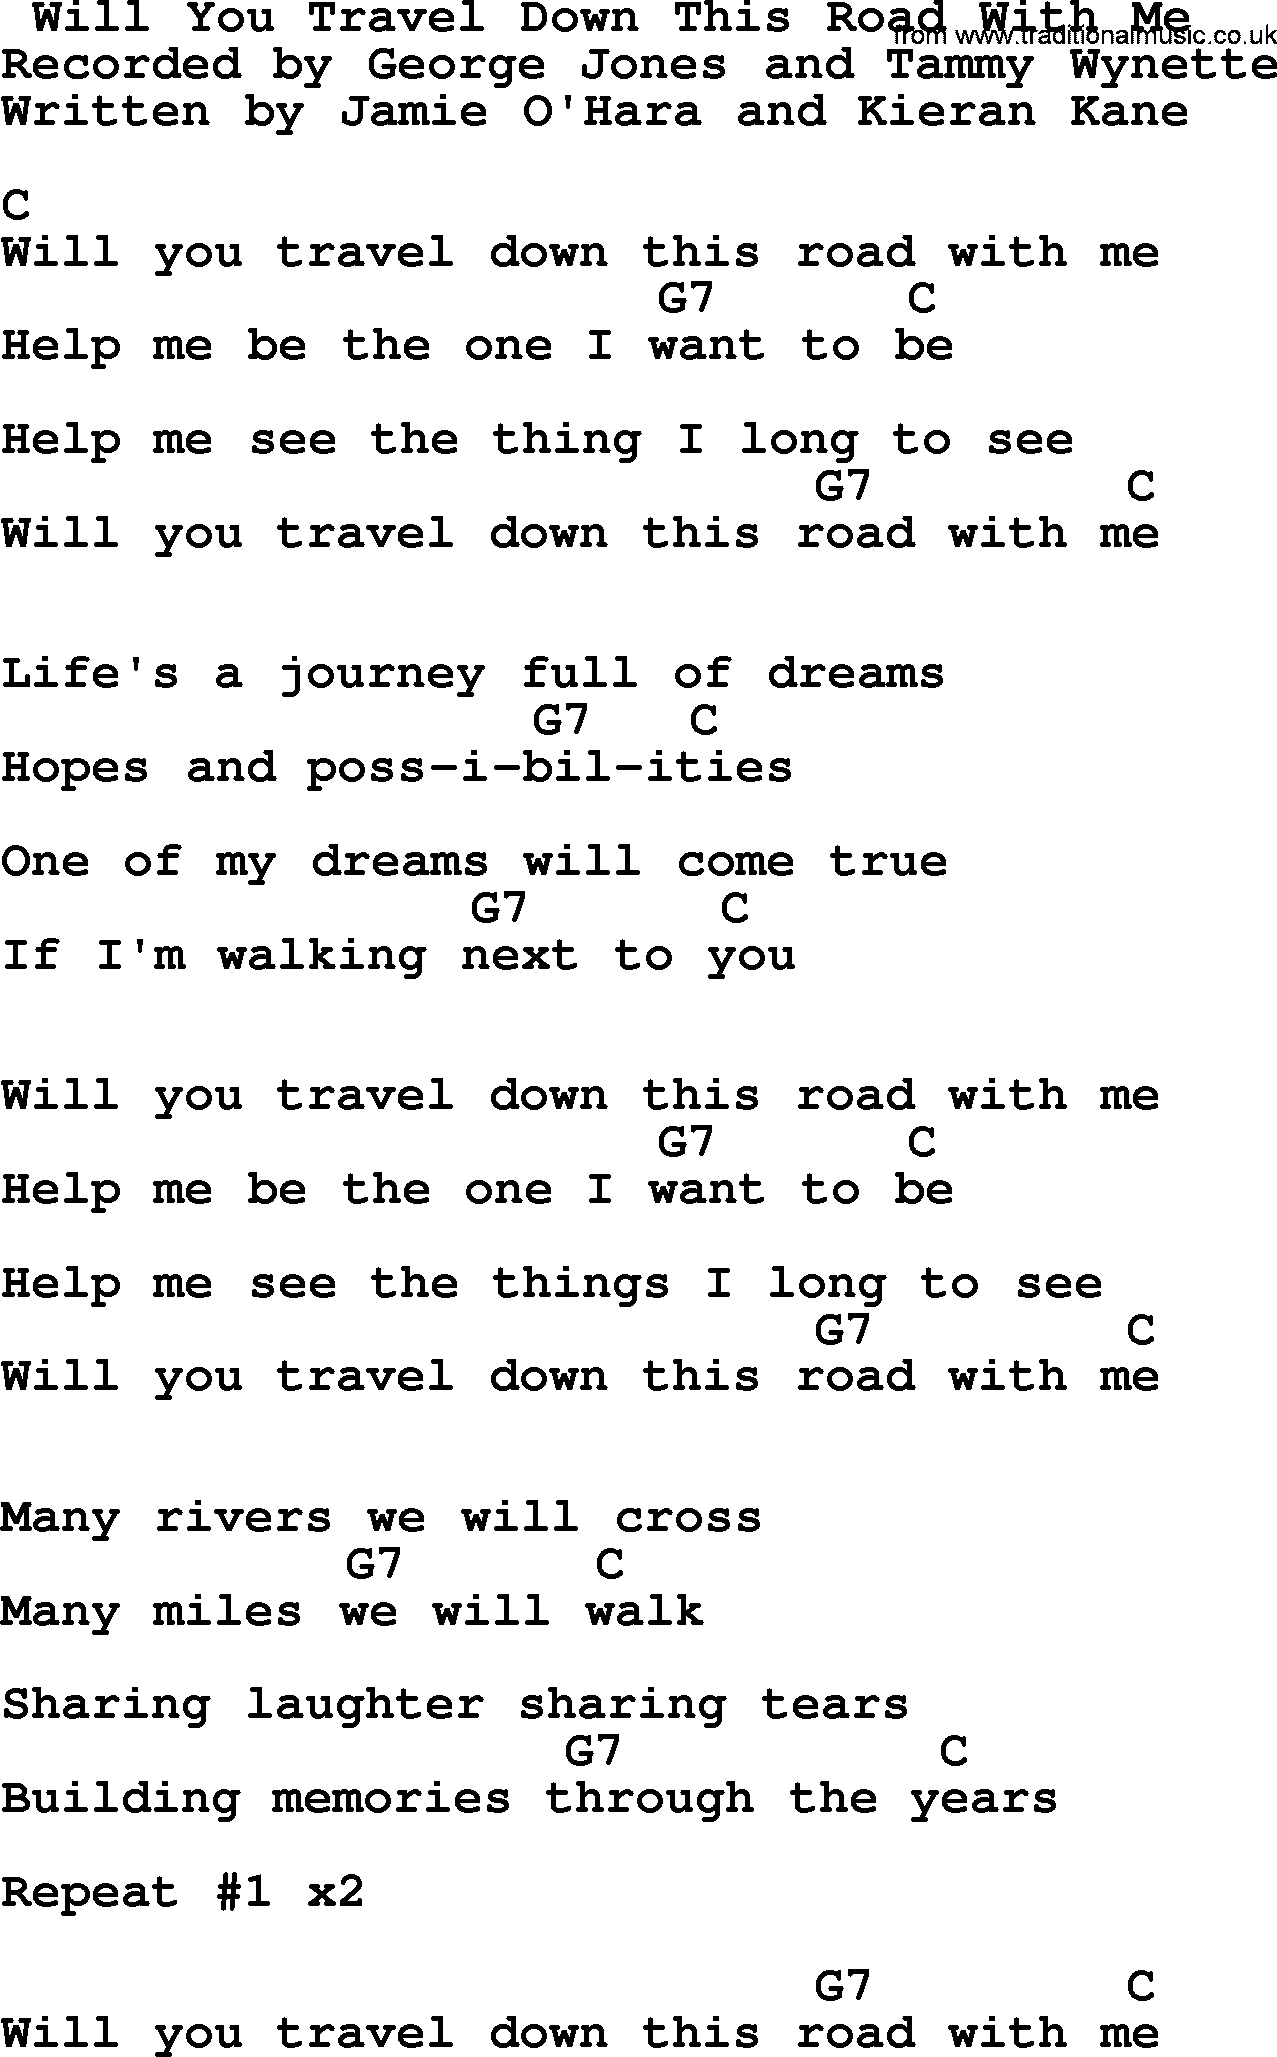 travel with me lyrics